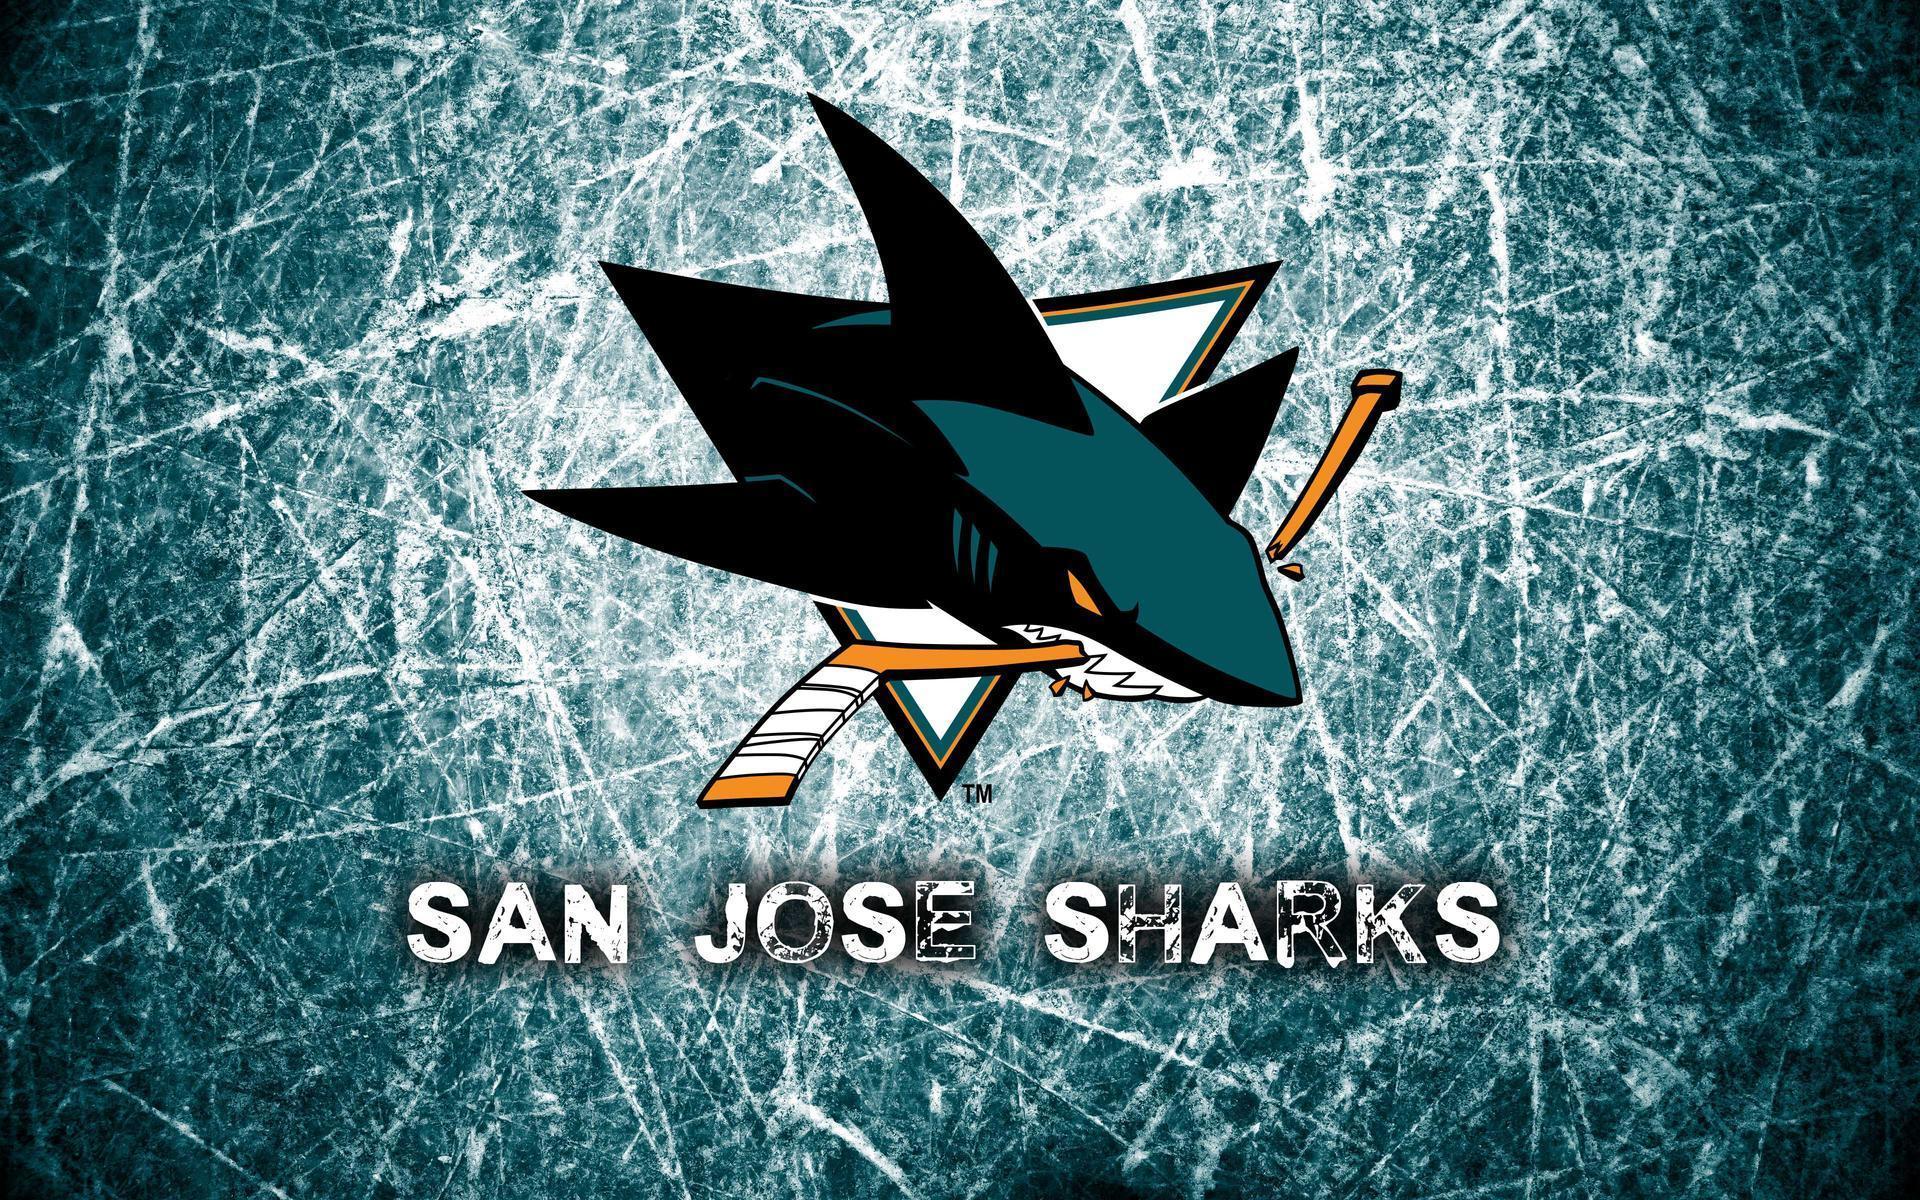 San Jose Sharks 2014 Logo Wallpaper Wide or HD